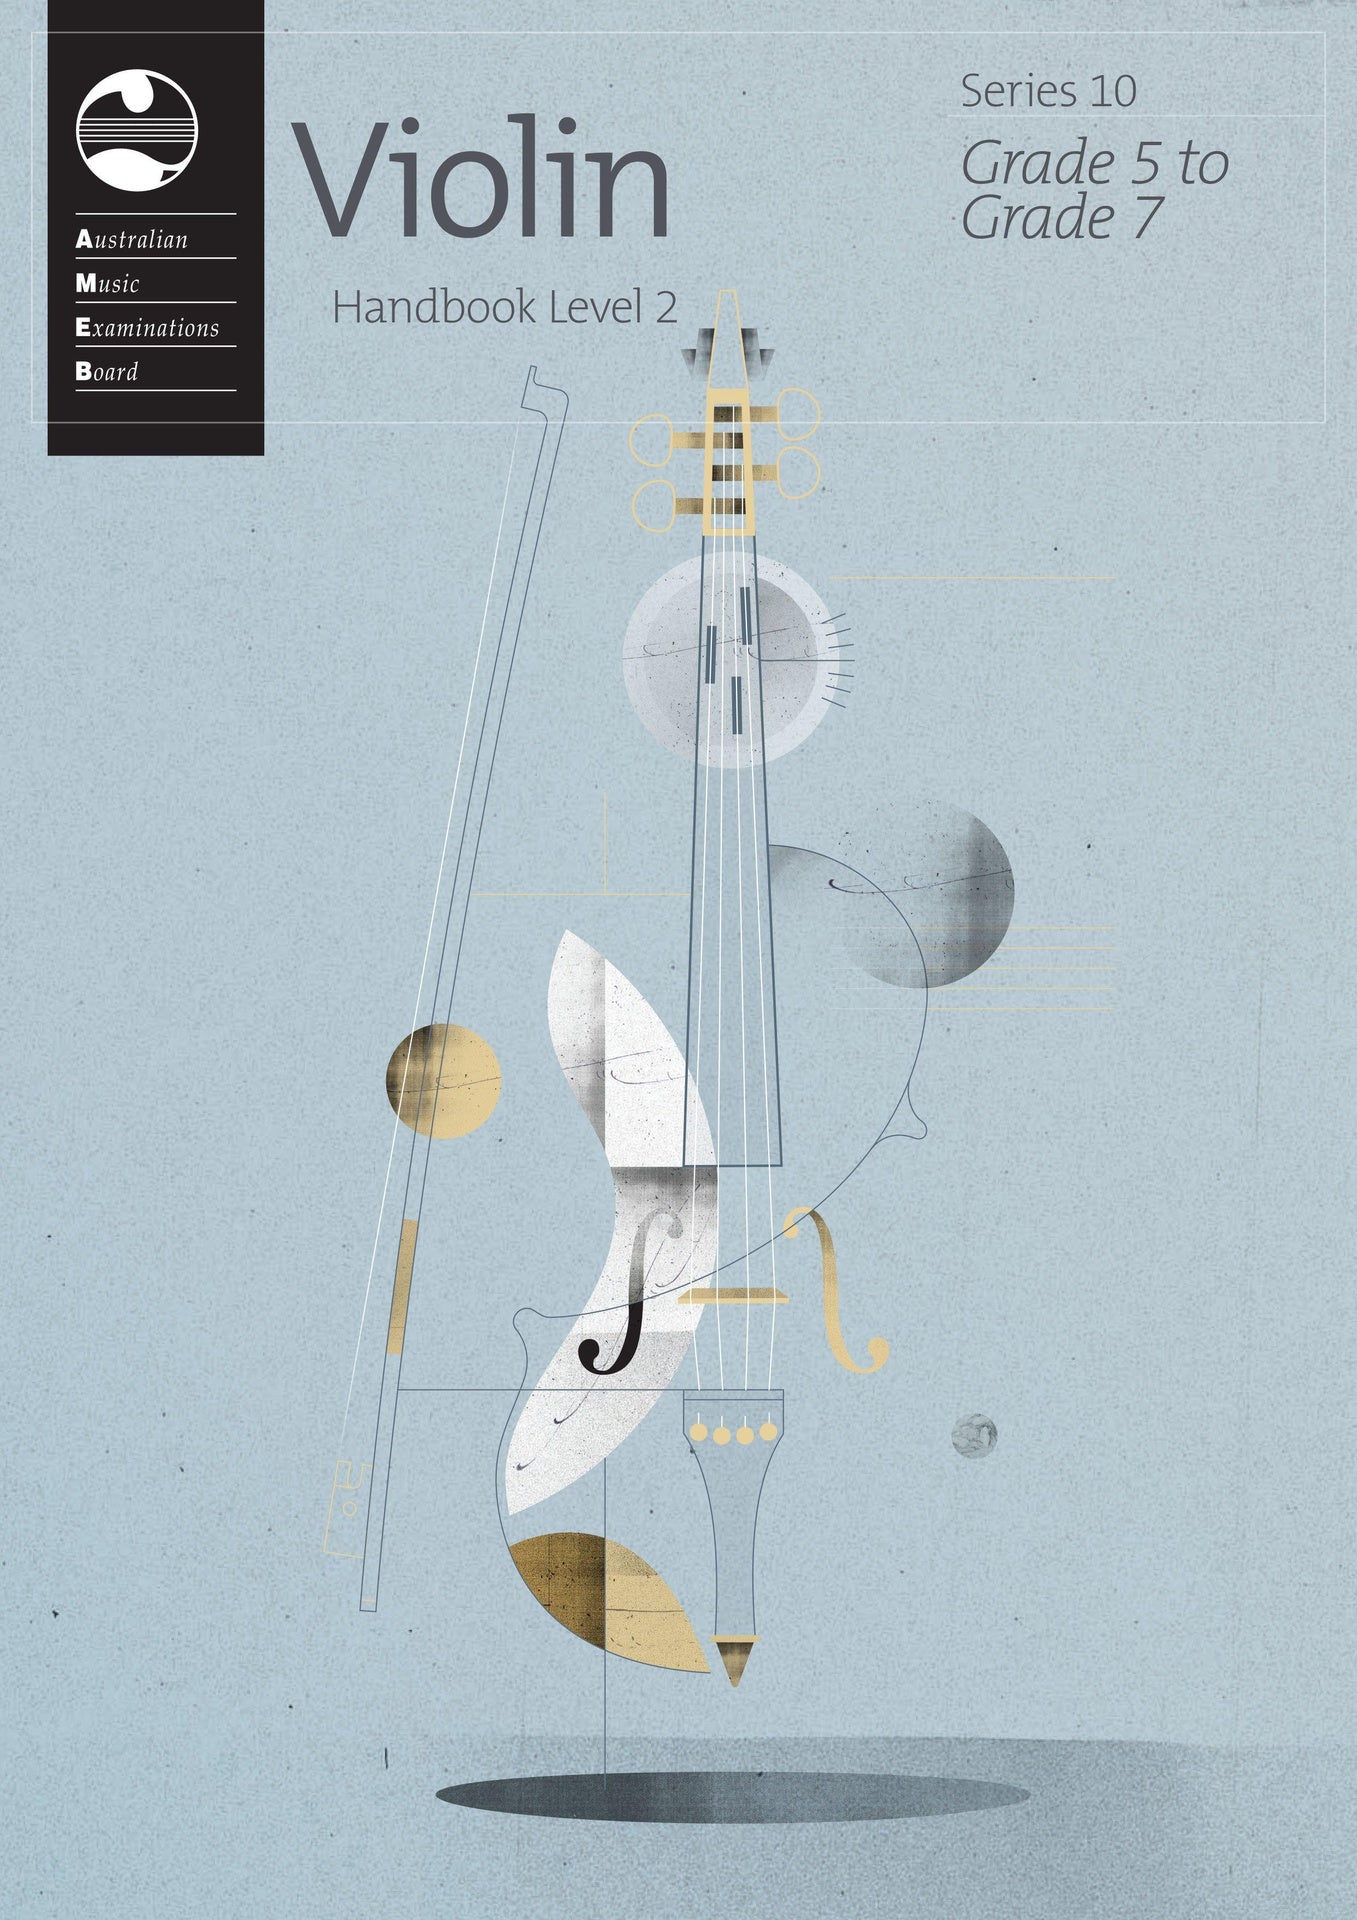 AMEB Violin Series 10 Handbook Level 2 (Grade 5 to Grade 7) (Analysis of Works) 1202729839